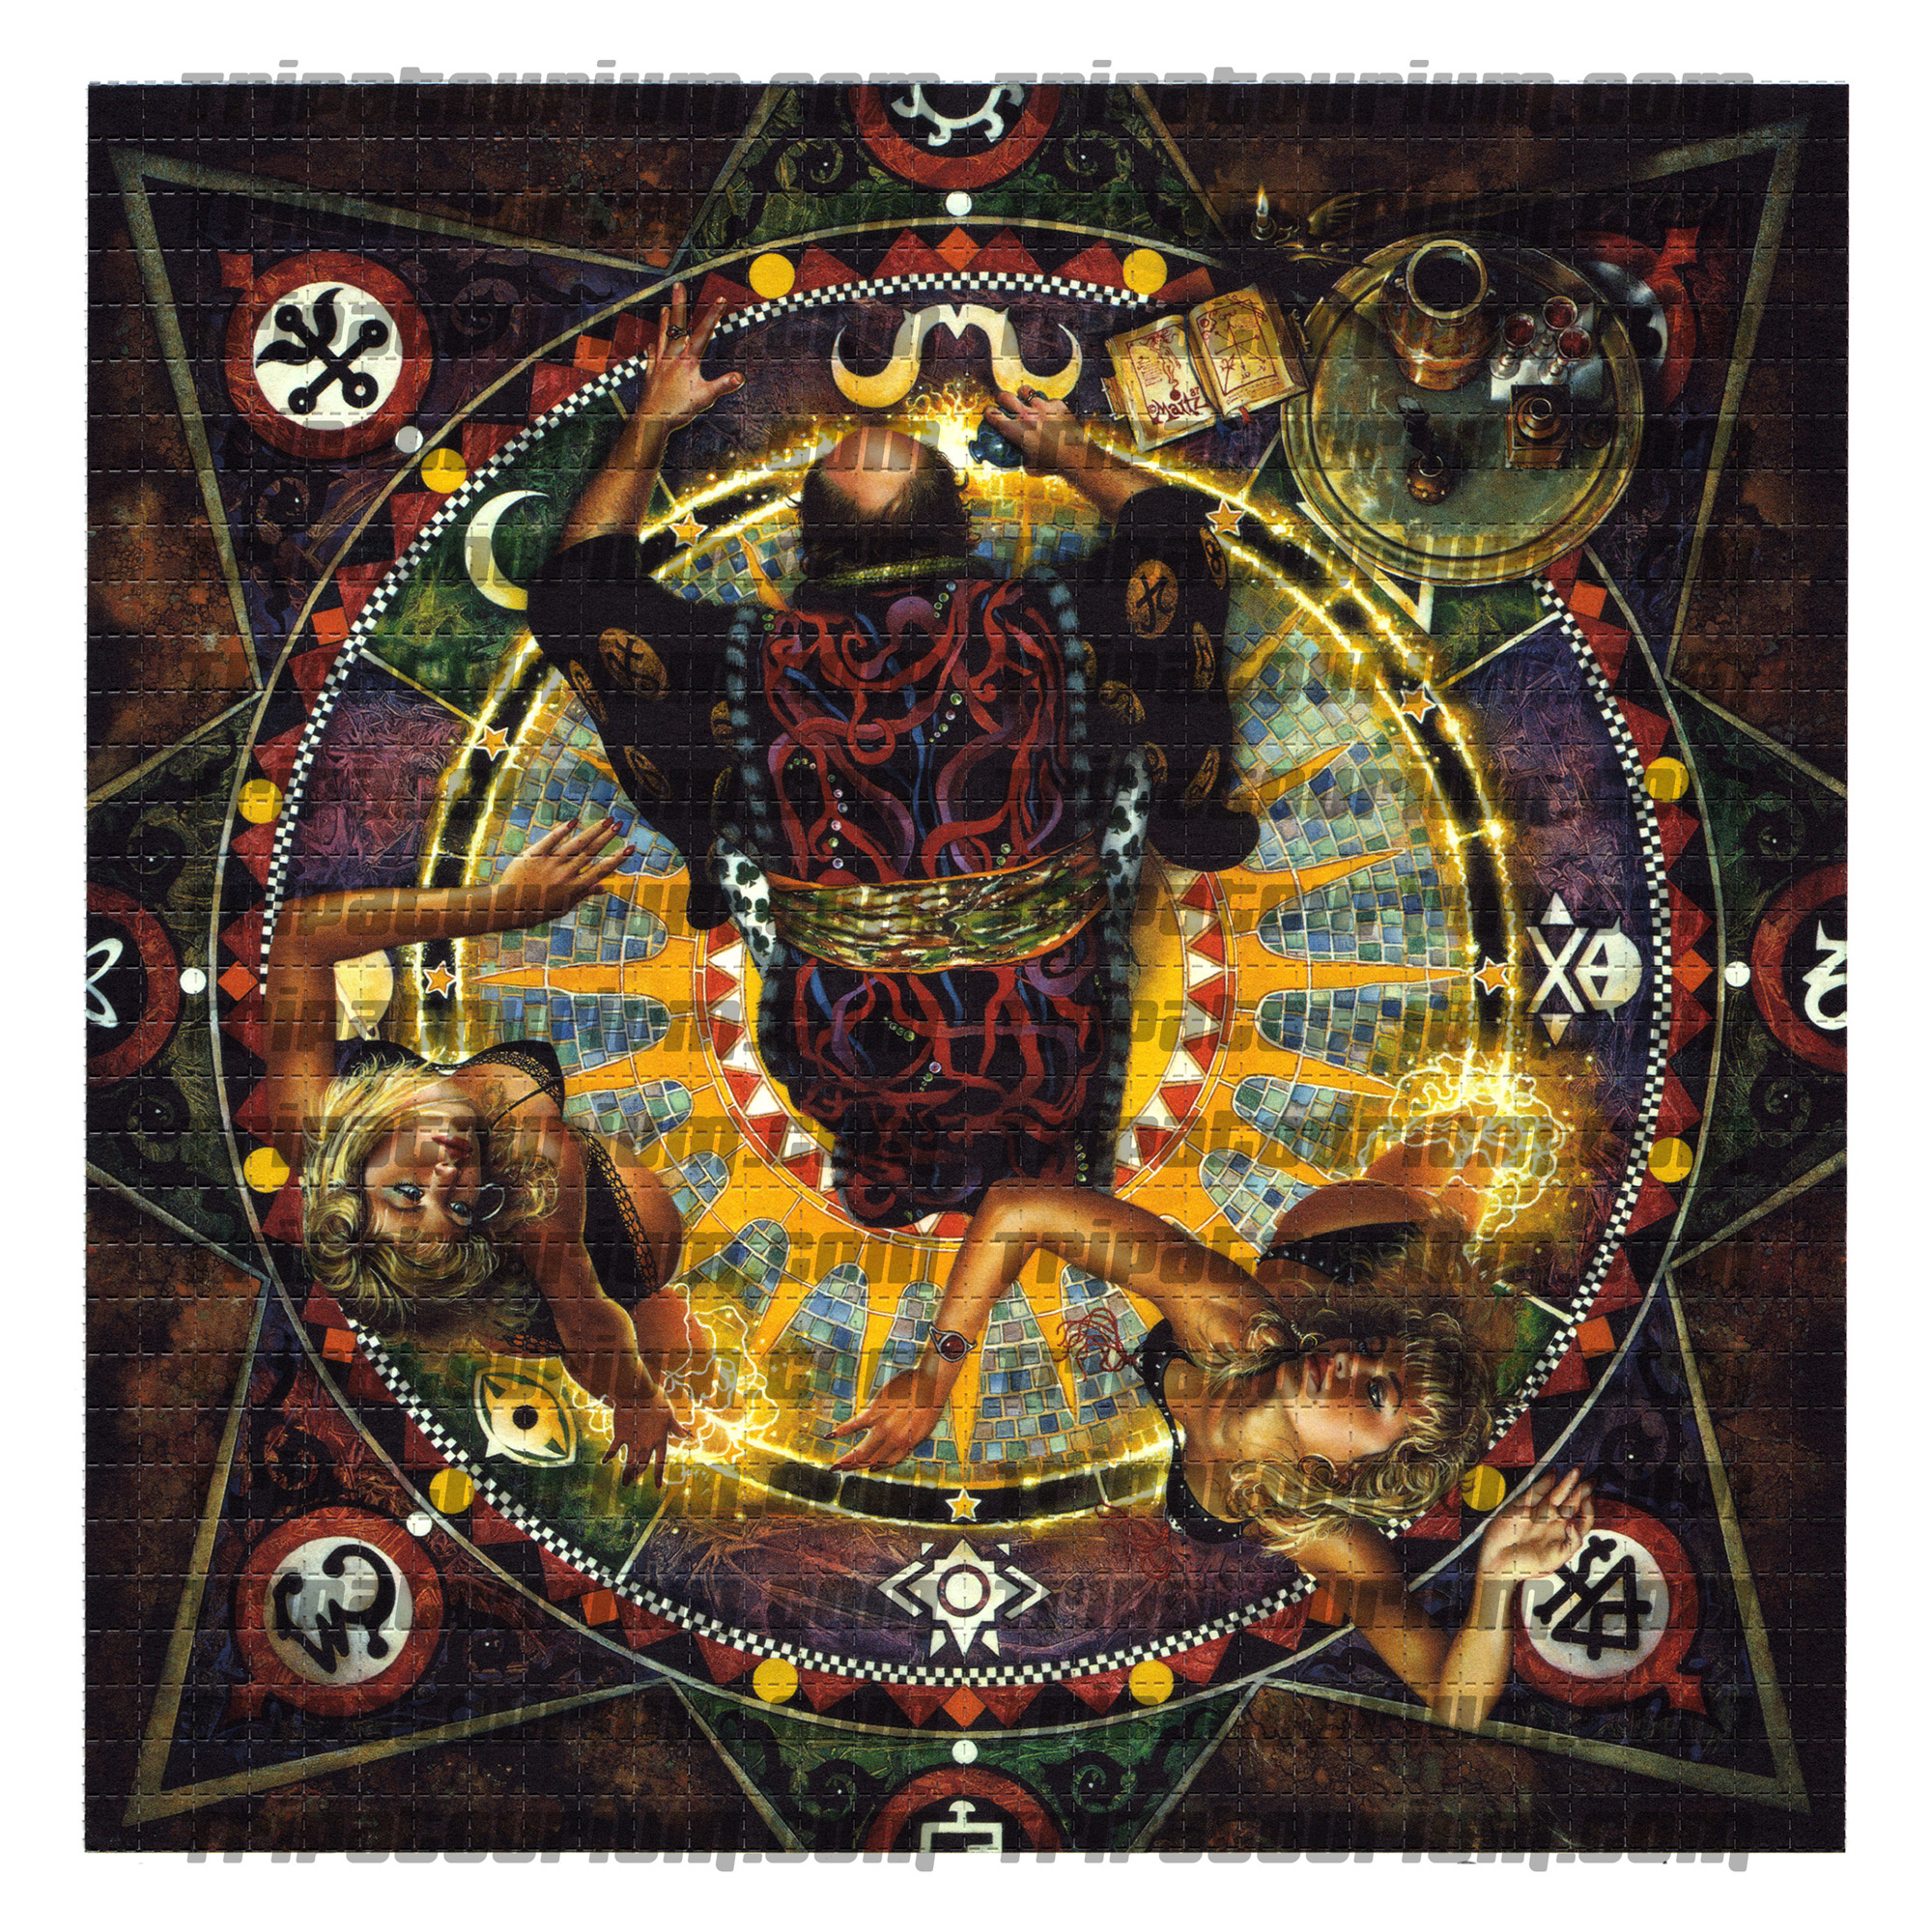 A scan of the LSD Blotter Art Print Conjure Maitz by Don Maitz